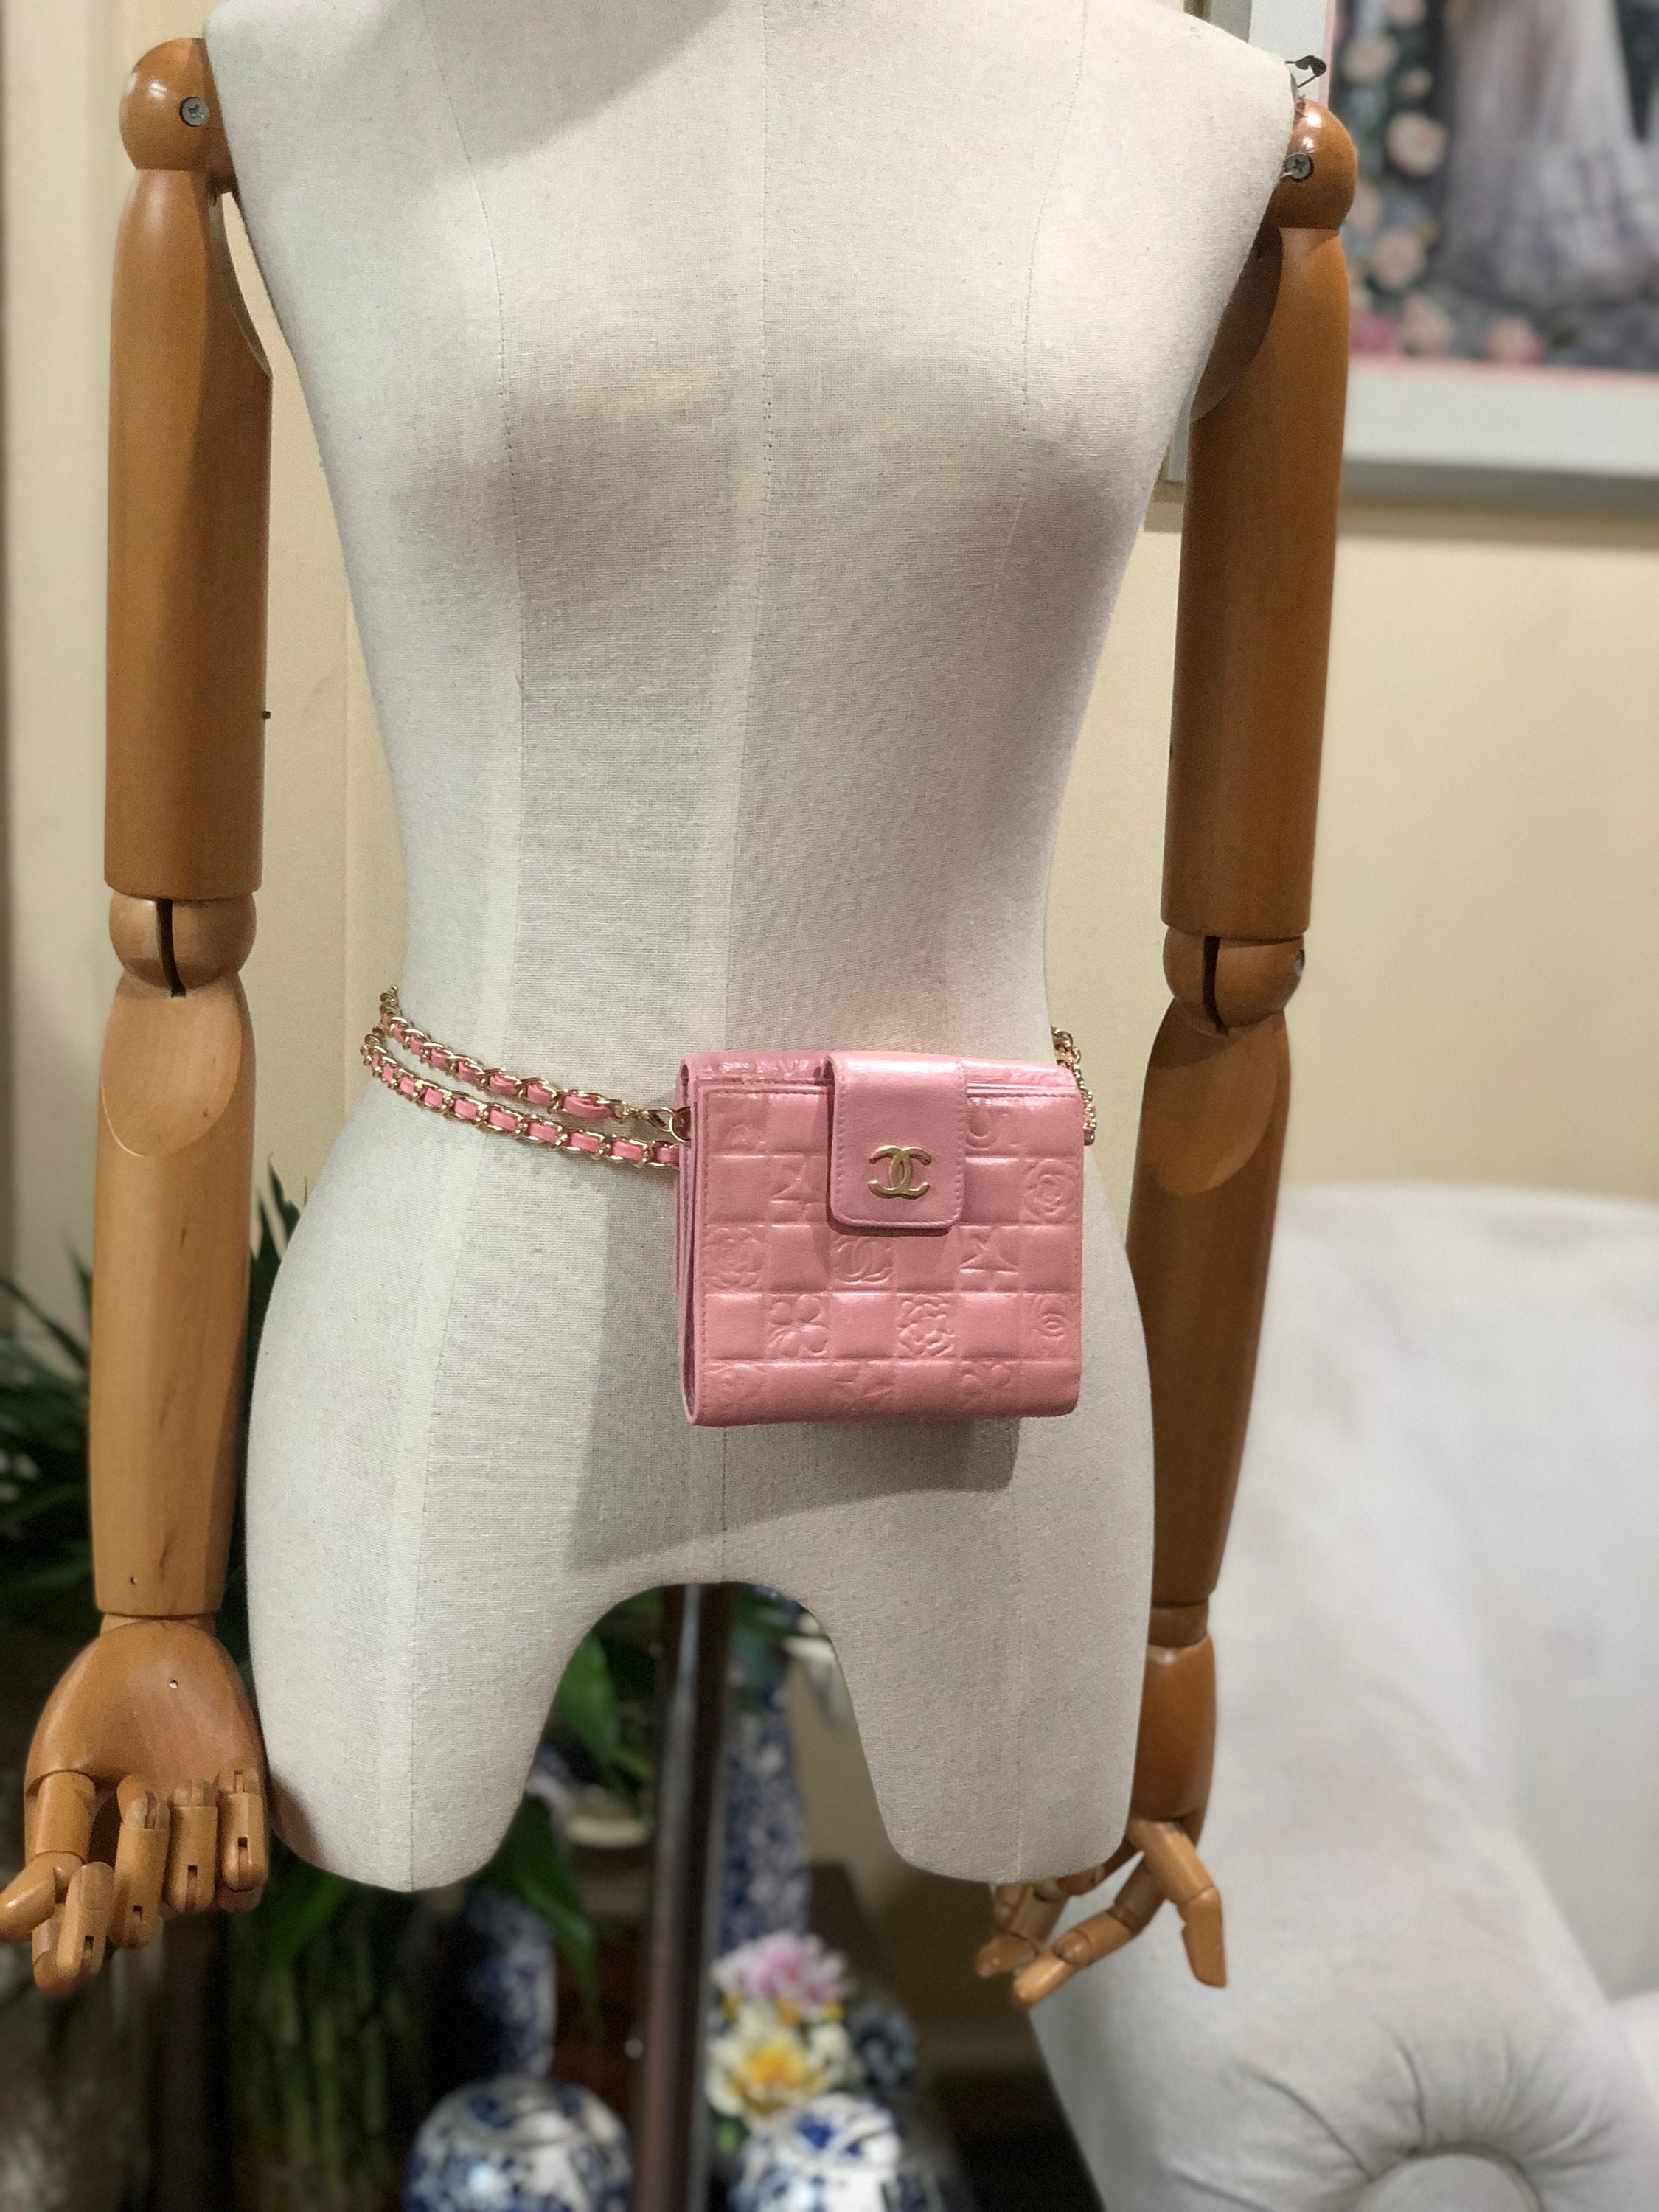 CHANEL BAG CHANEL matelasse mini pouch navy accessory case unisex